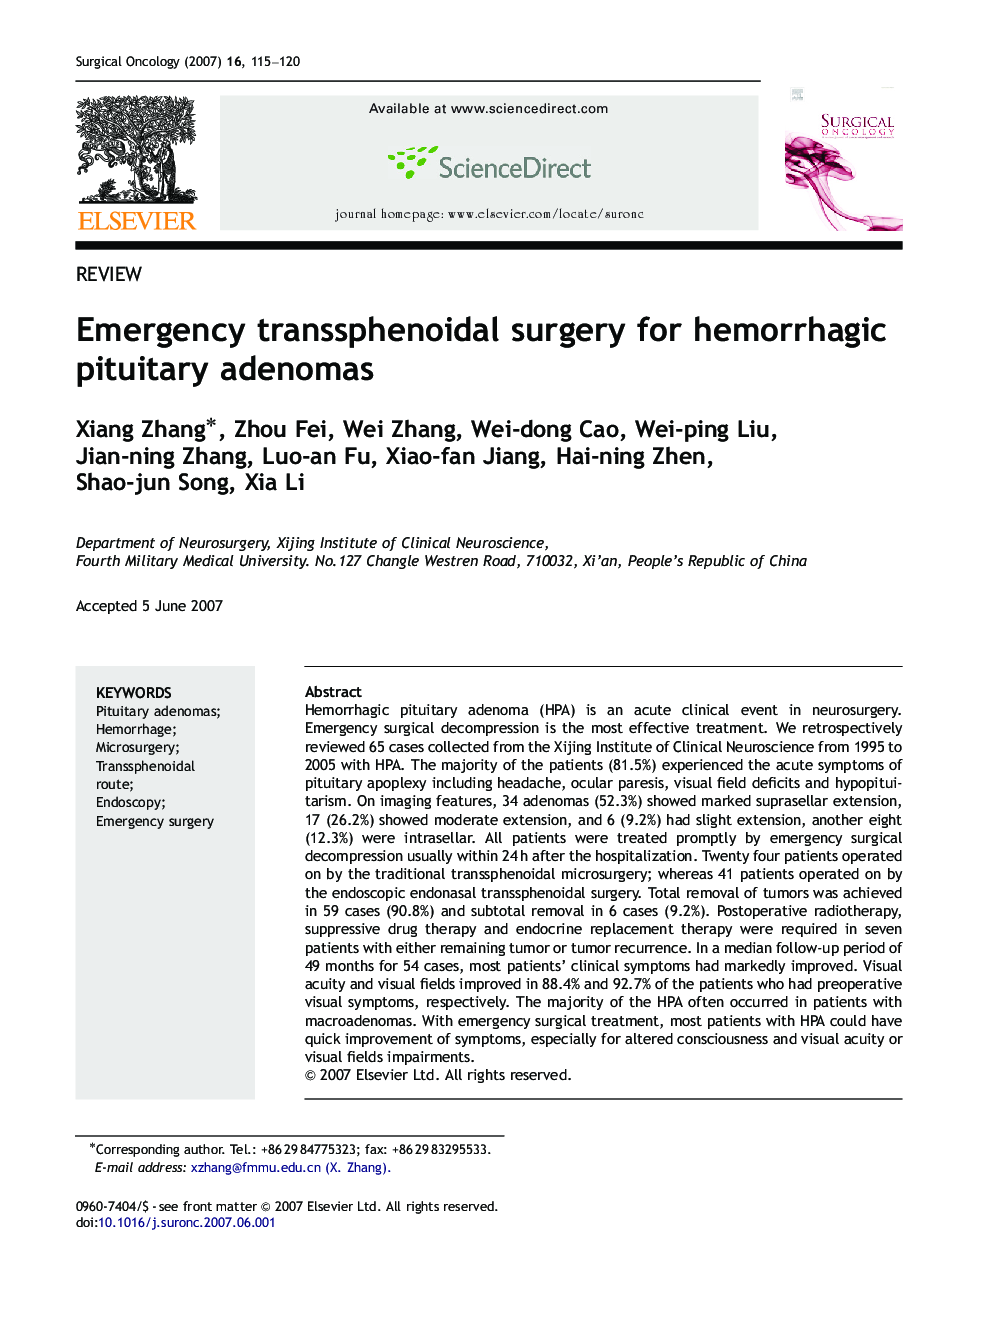 Emergency transsphenoidal surgery for hemorrhagic pituitary adenomas